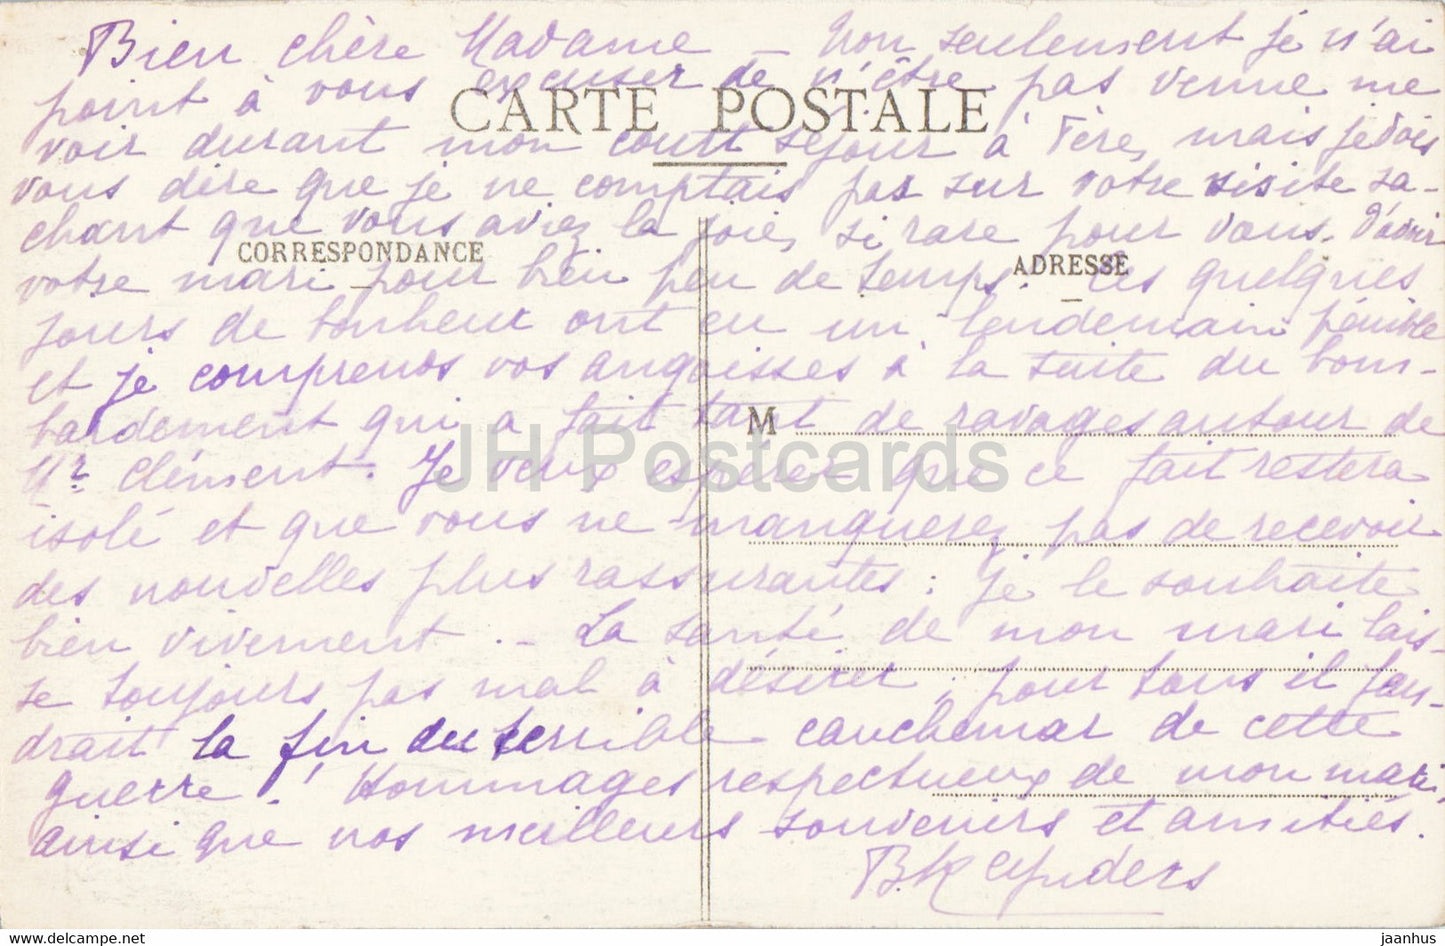 Dijon - Jacquemart Horloge de l'Eglise Notre Dame - alte Postkarte - 1916 - Frankreich - gebraucht